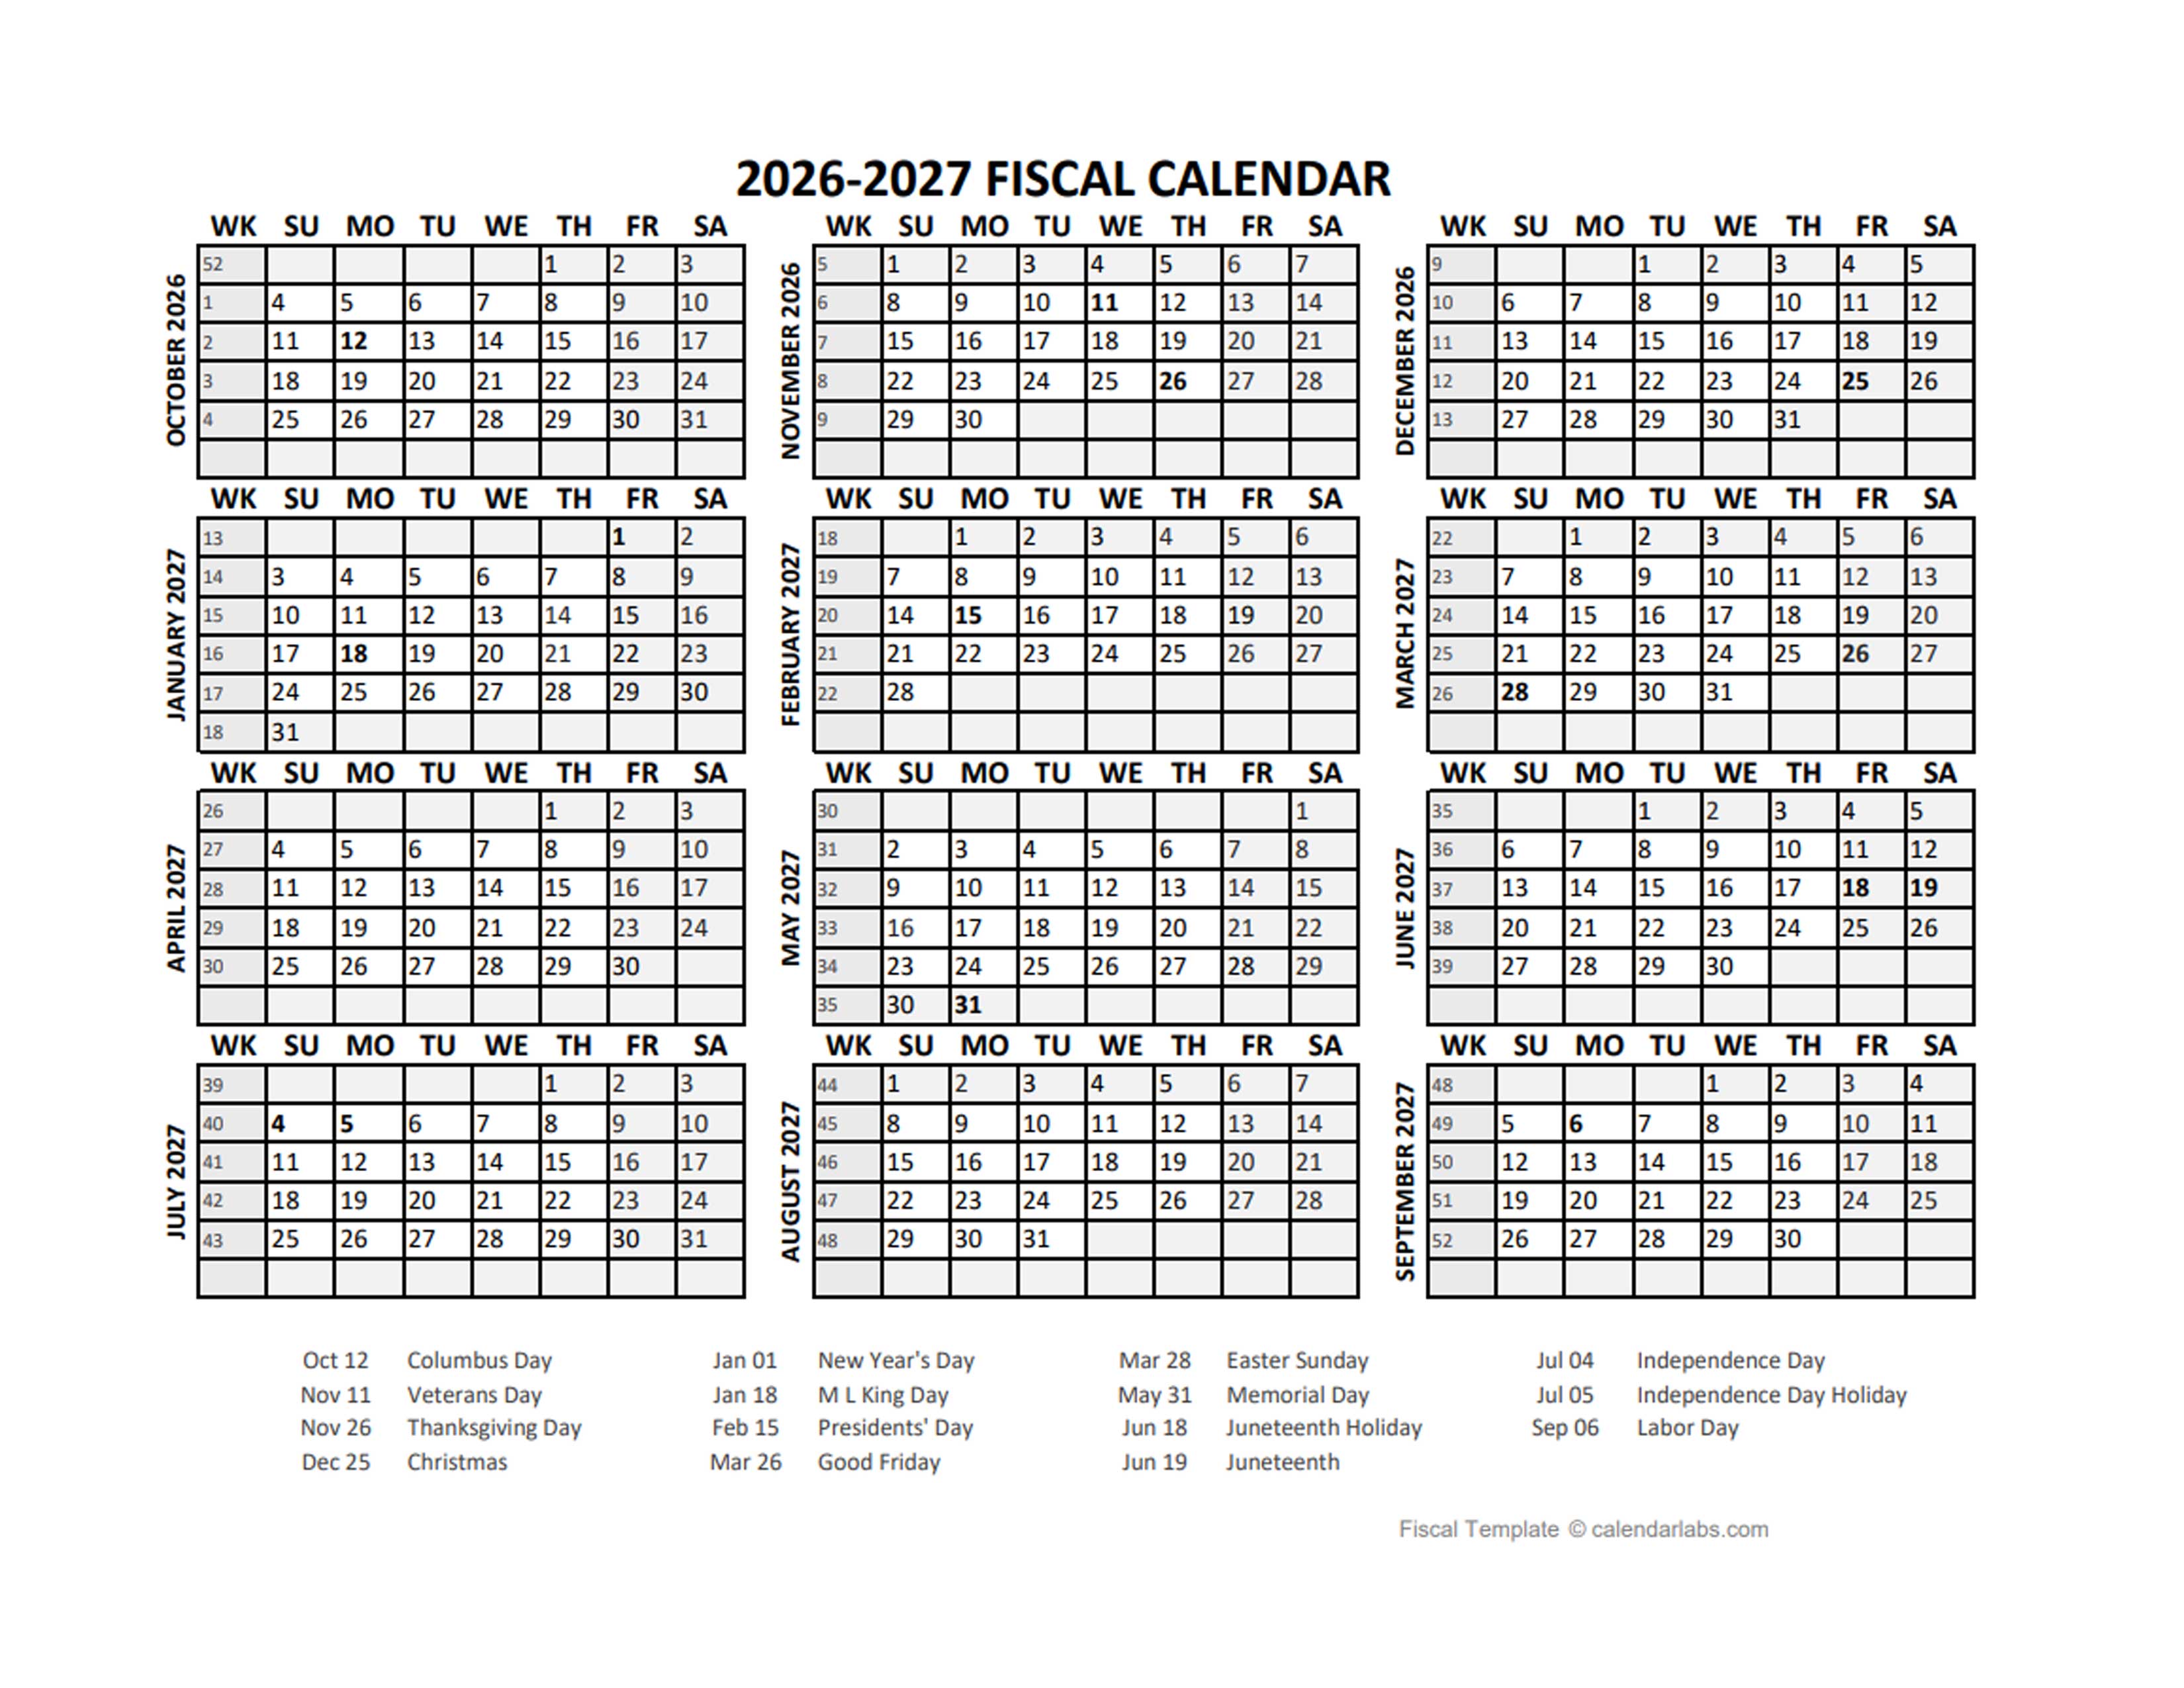 Fiscal Calendar 2026-2027 Templates - Free Printable Templates